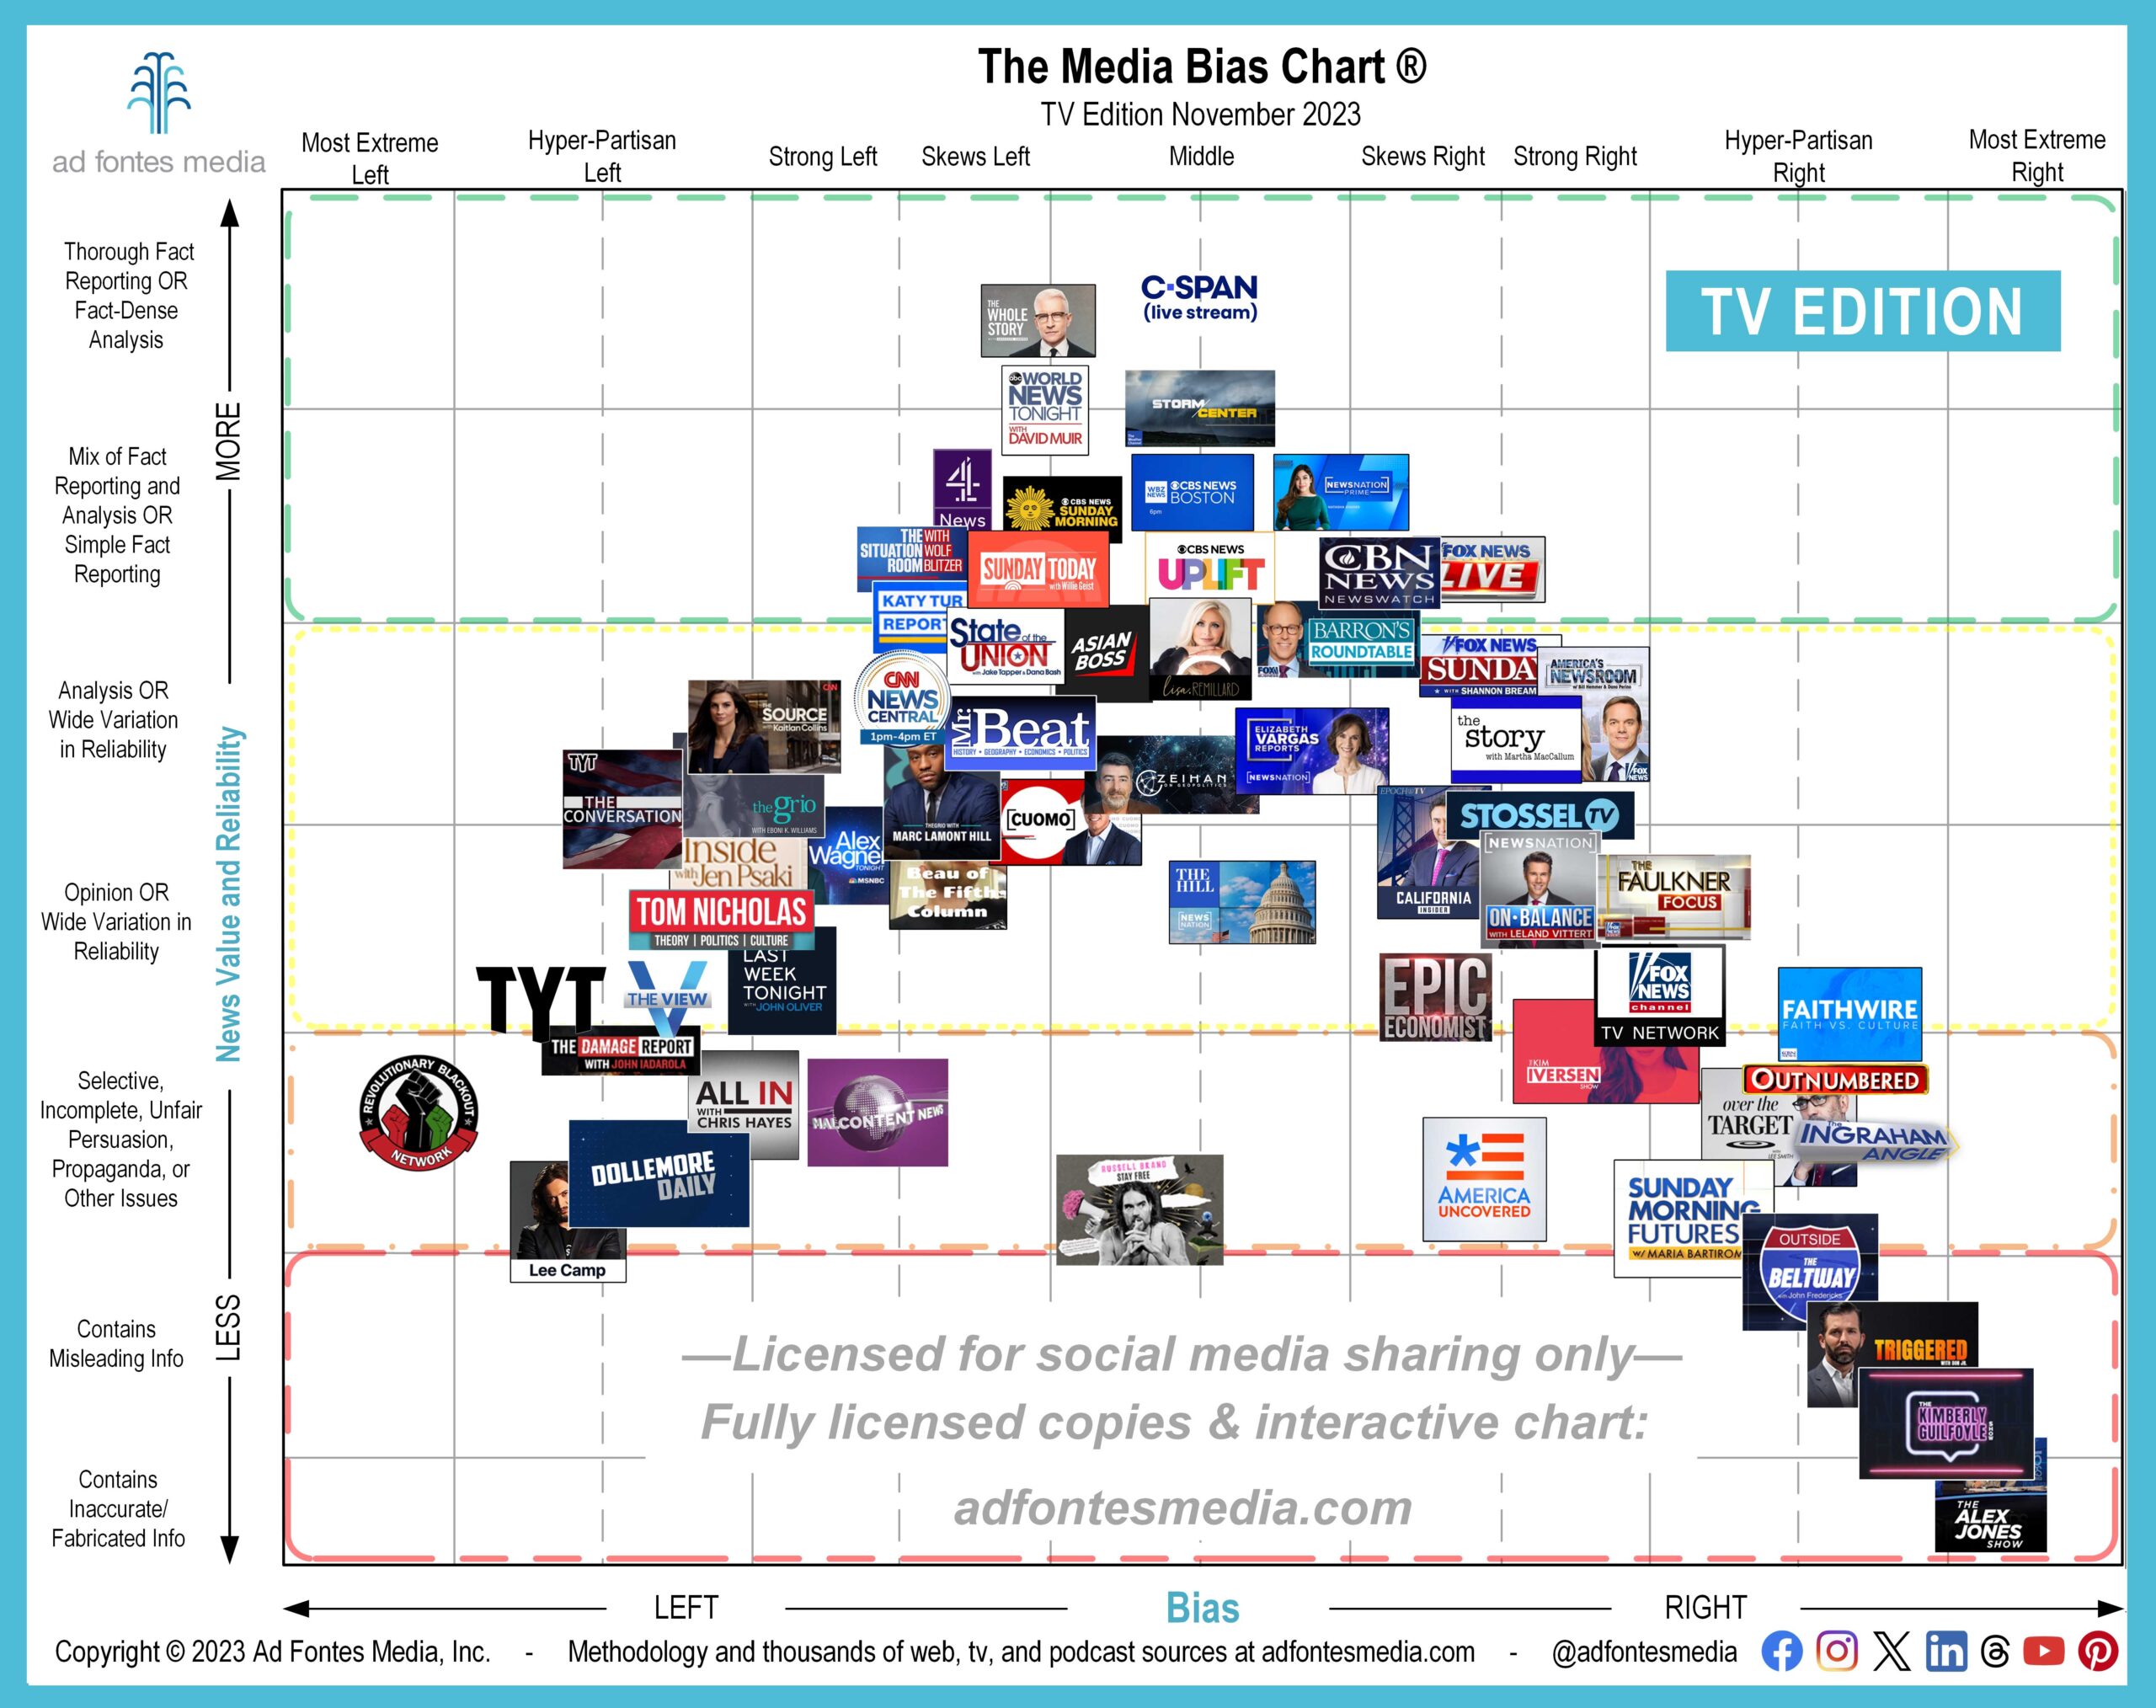 Ad Fontes Media’s November chart highlights media bias across TV news